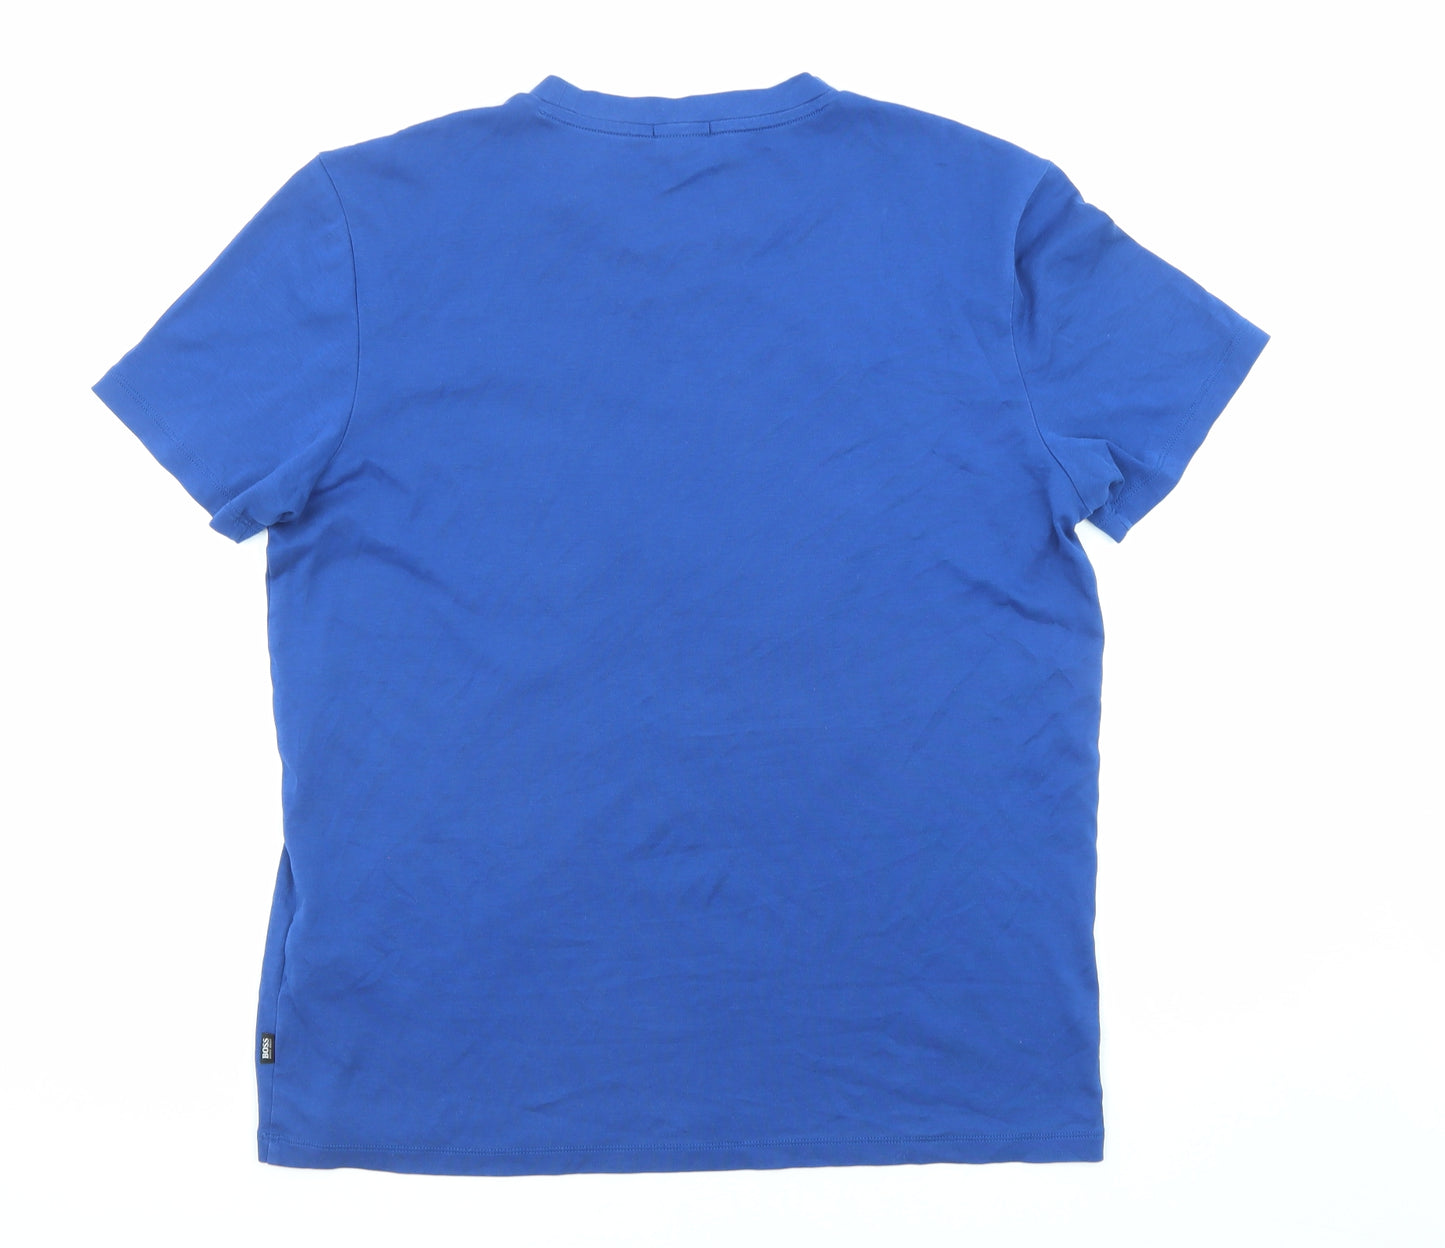 HUGO BOSS Mens Blue Cotton T-Shirt Size L Round Neck - New York Tokyo London Berlin Paris Shanghai